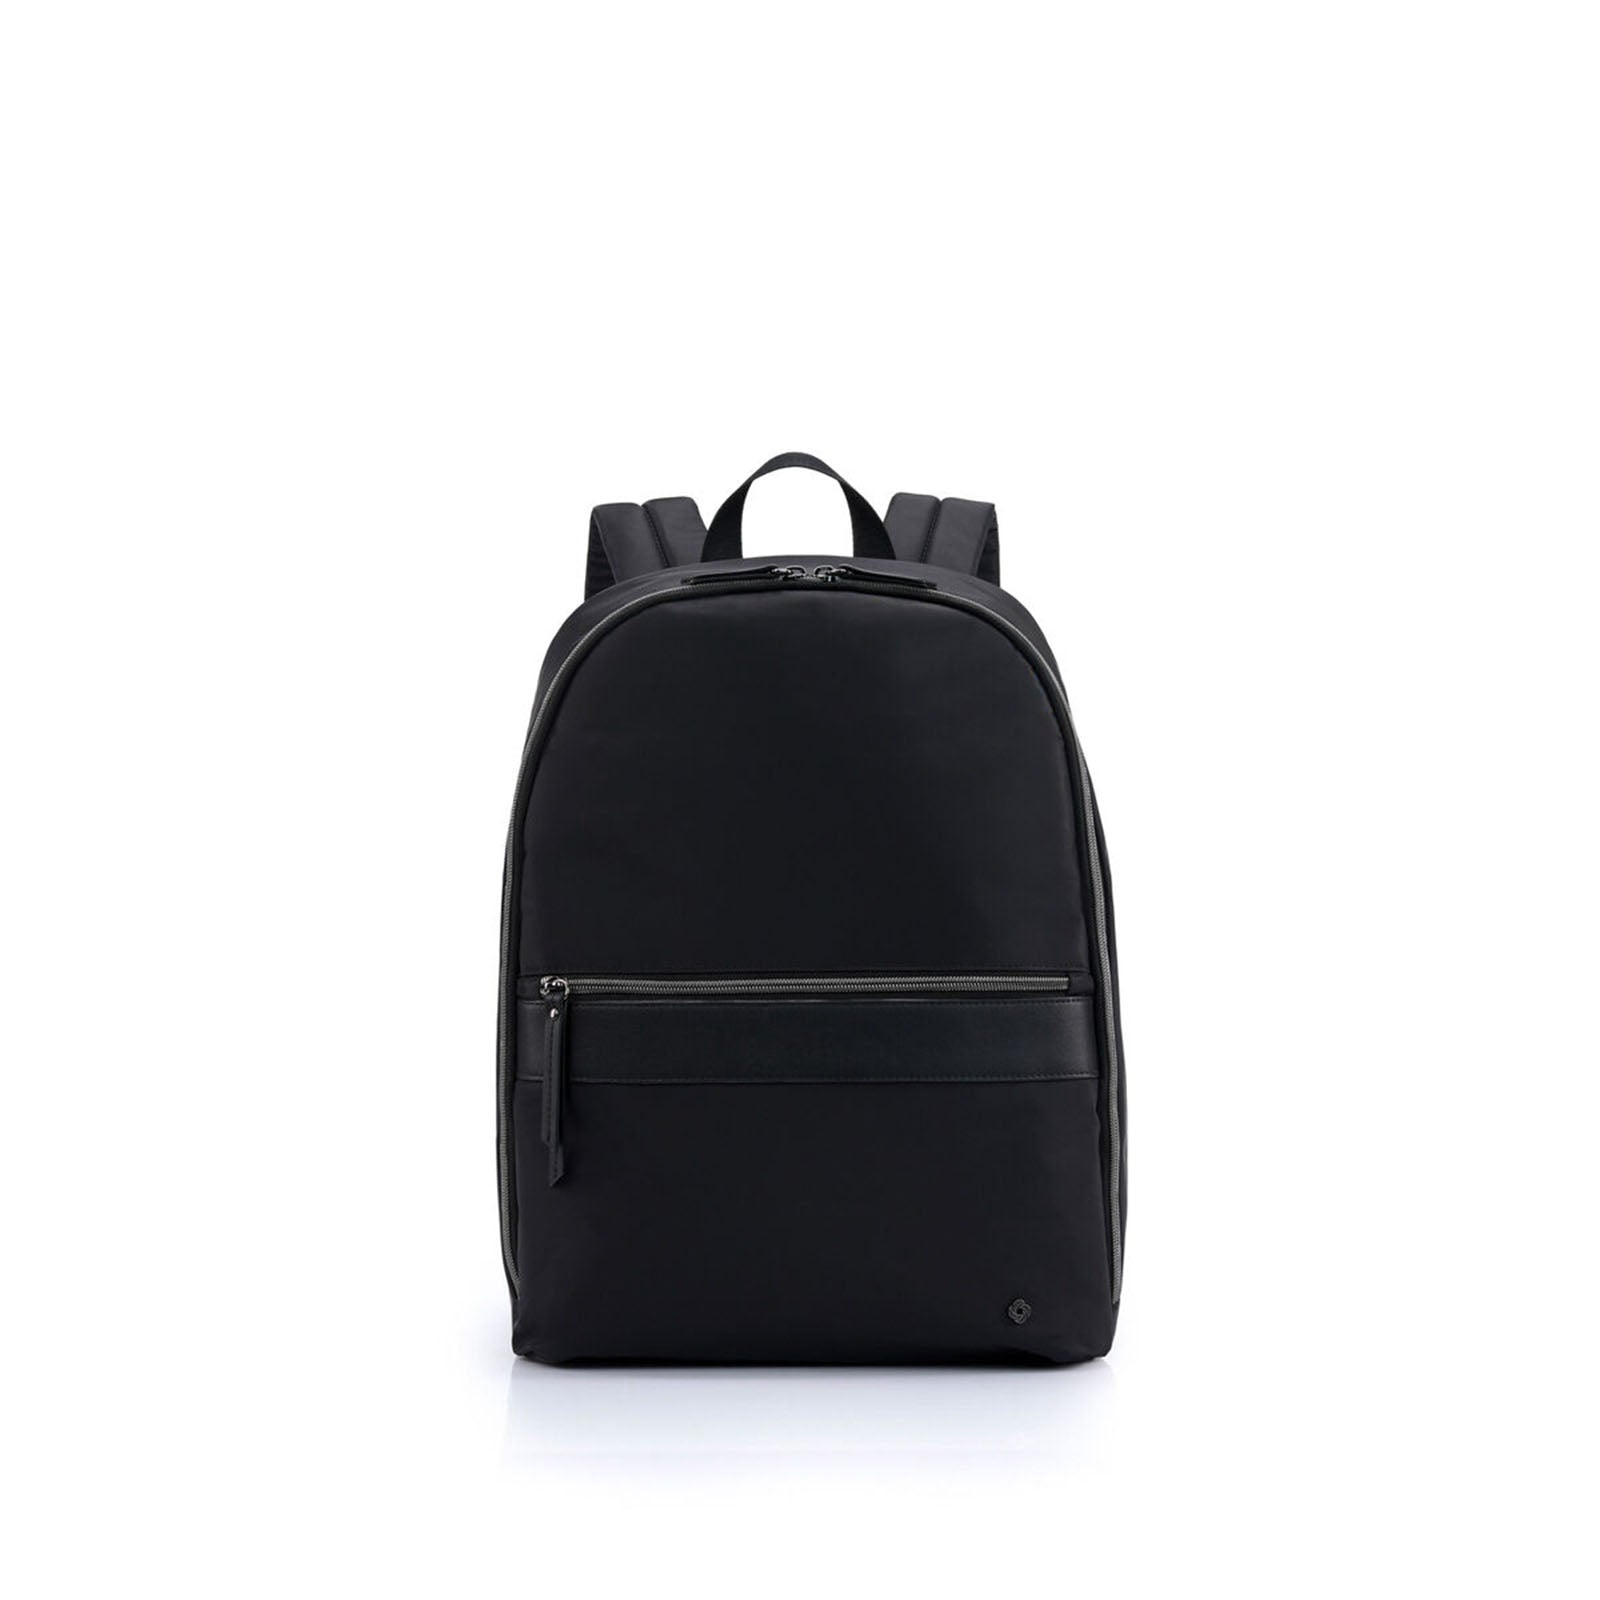 Samsonite-Mobile-Solutions-Backpack-Black-Front